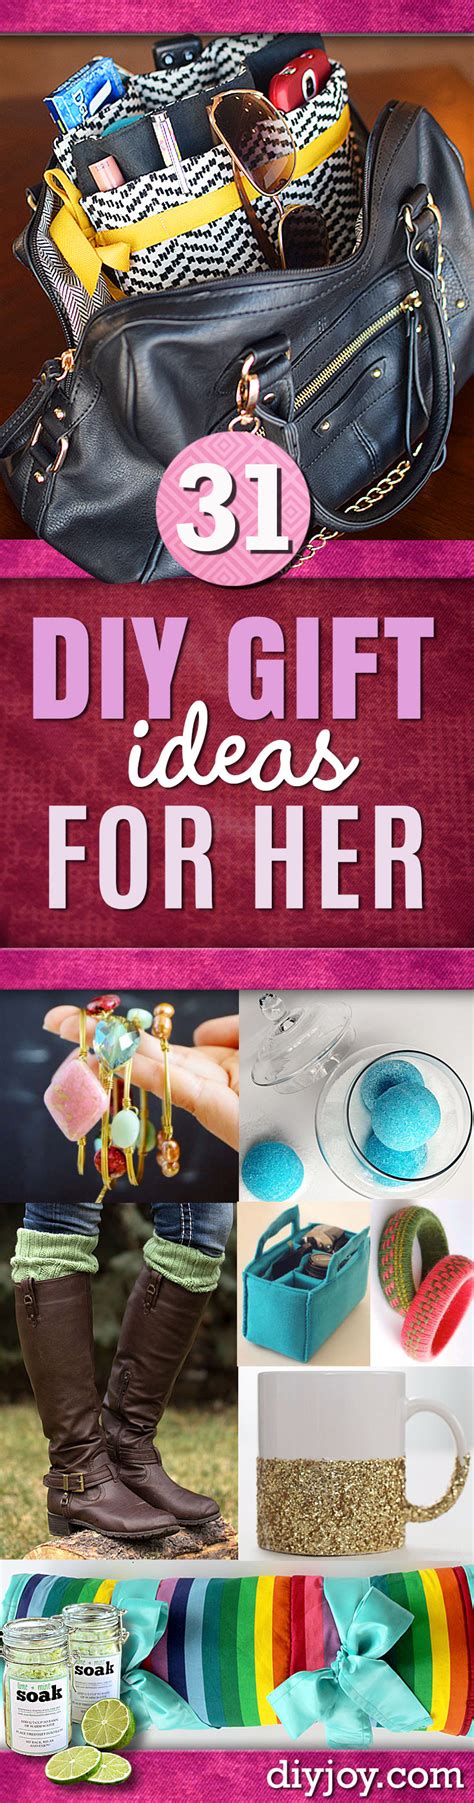 Diy gift ideas for mom birthday easy. DIY Gift Ideas for Her